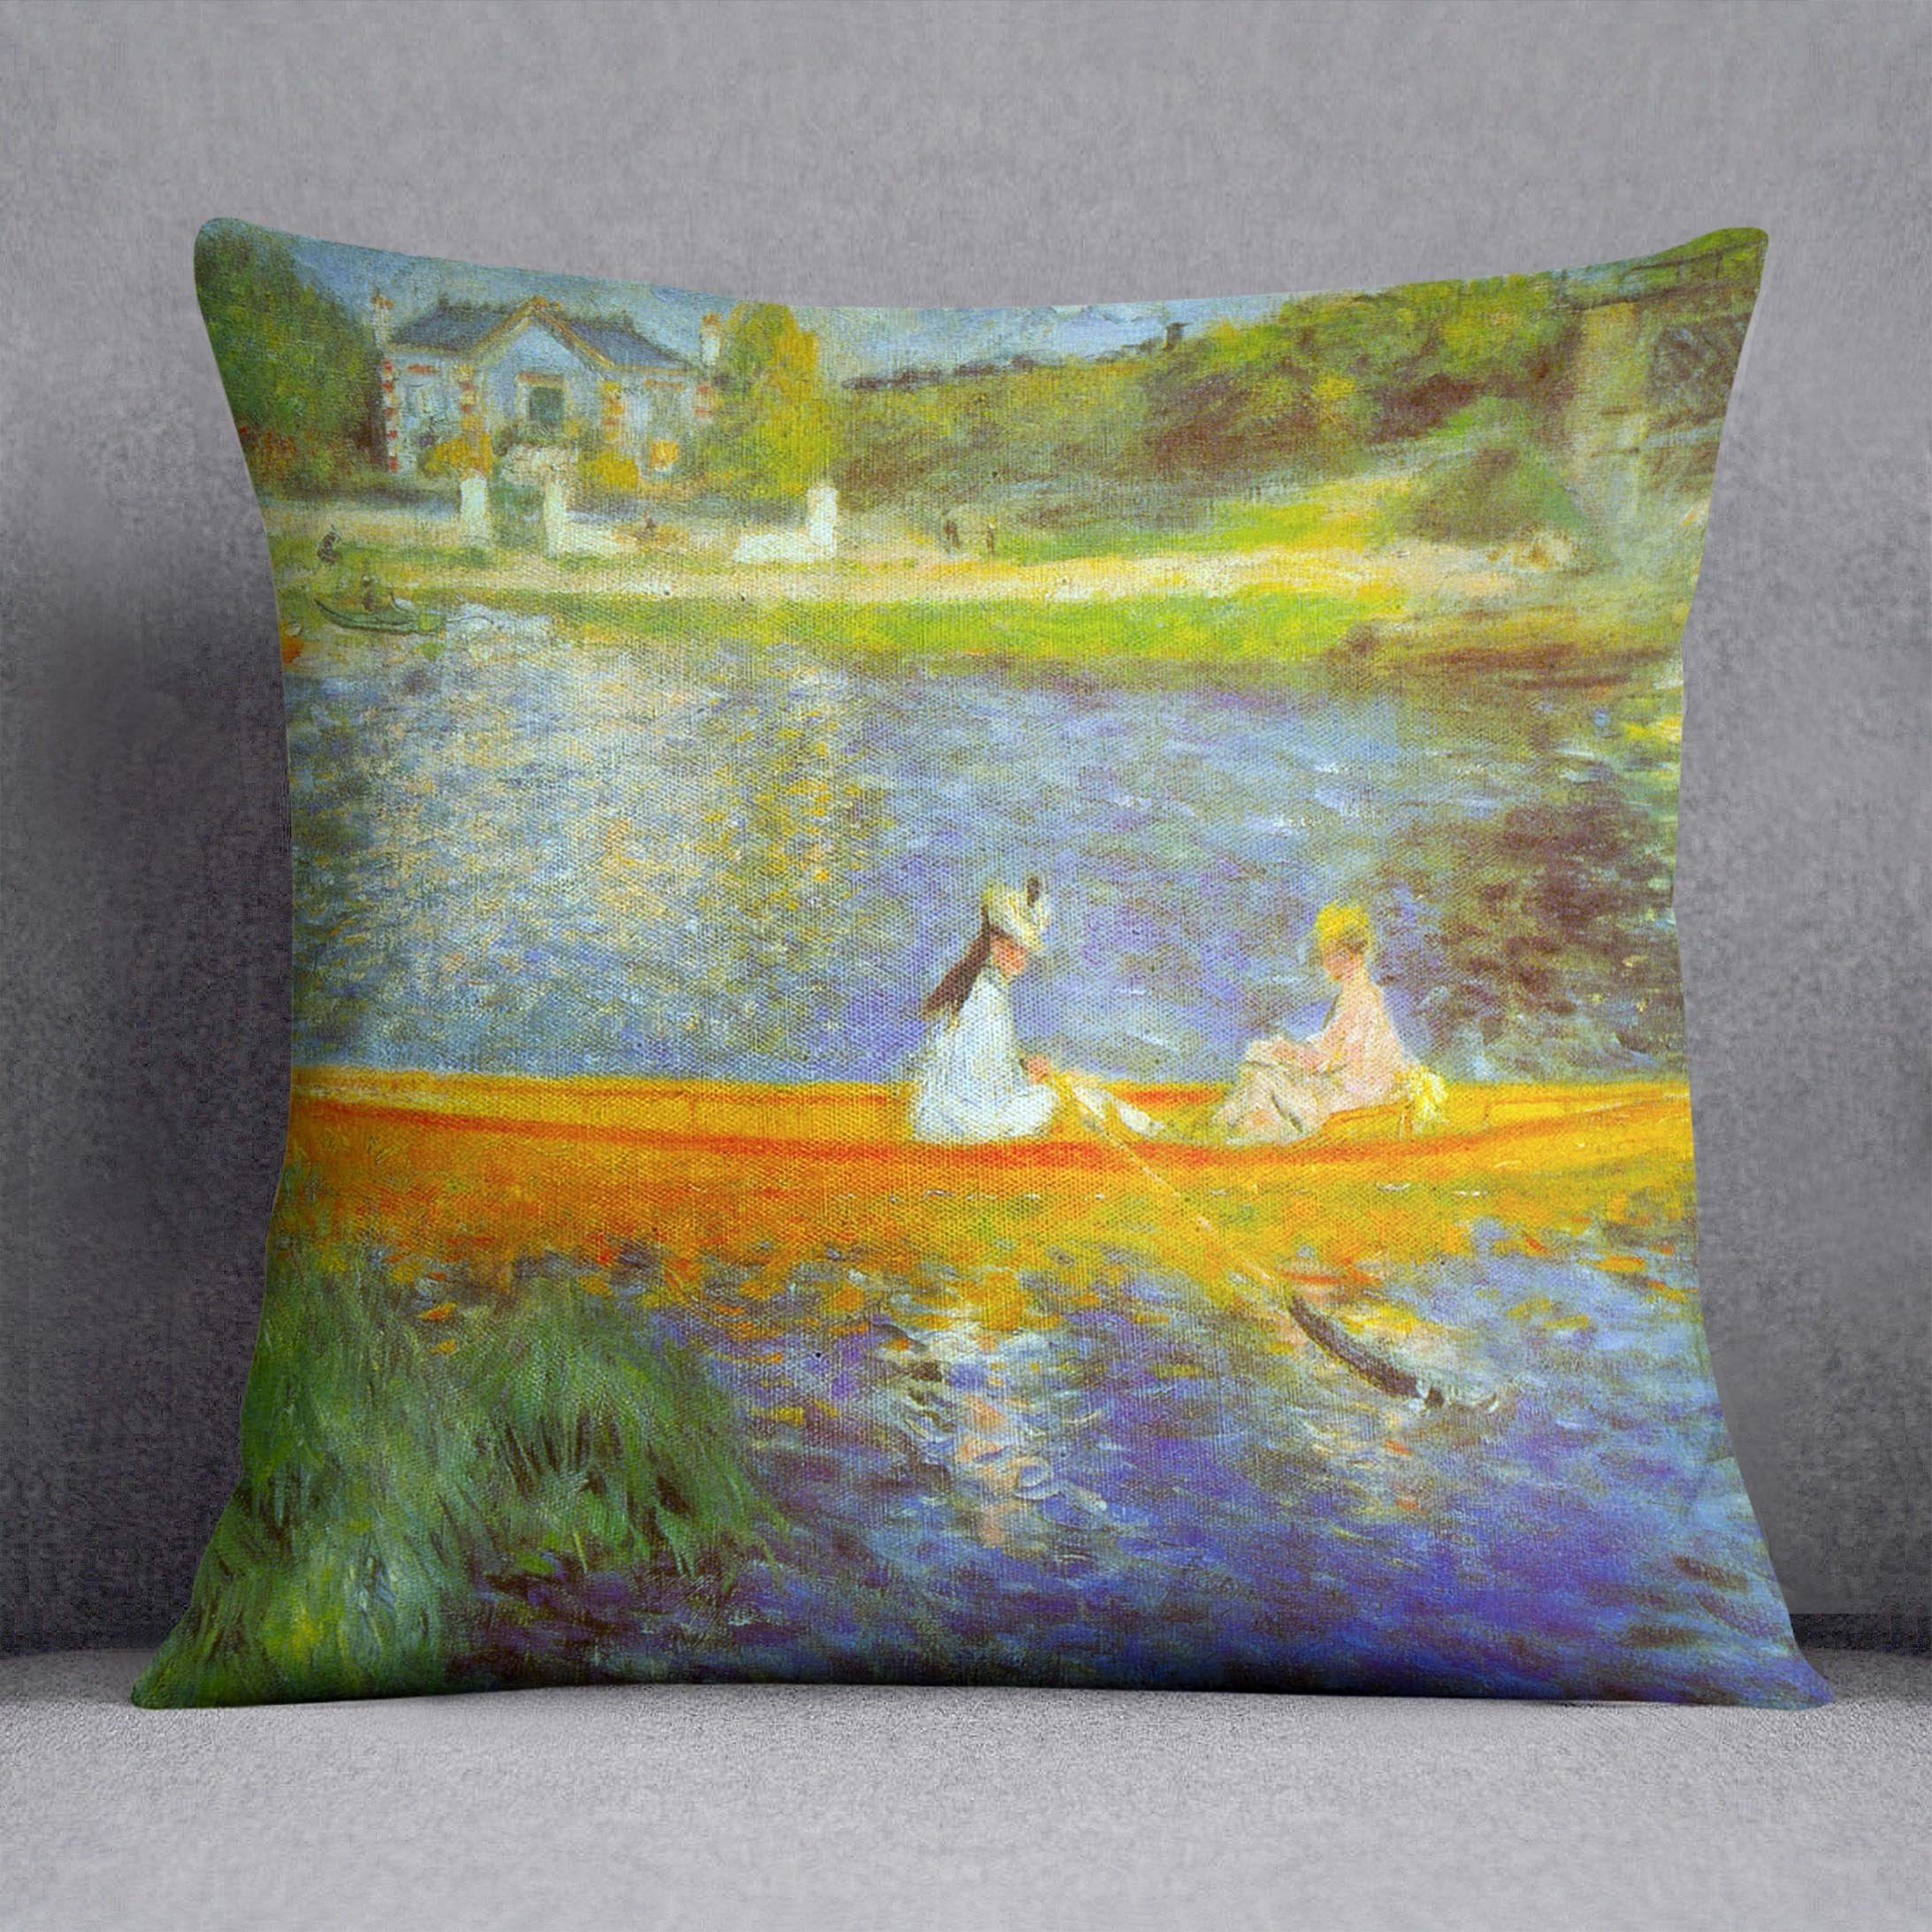 The Seine by Renoir Throw Pillow